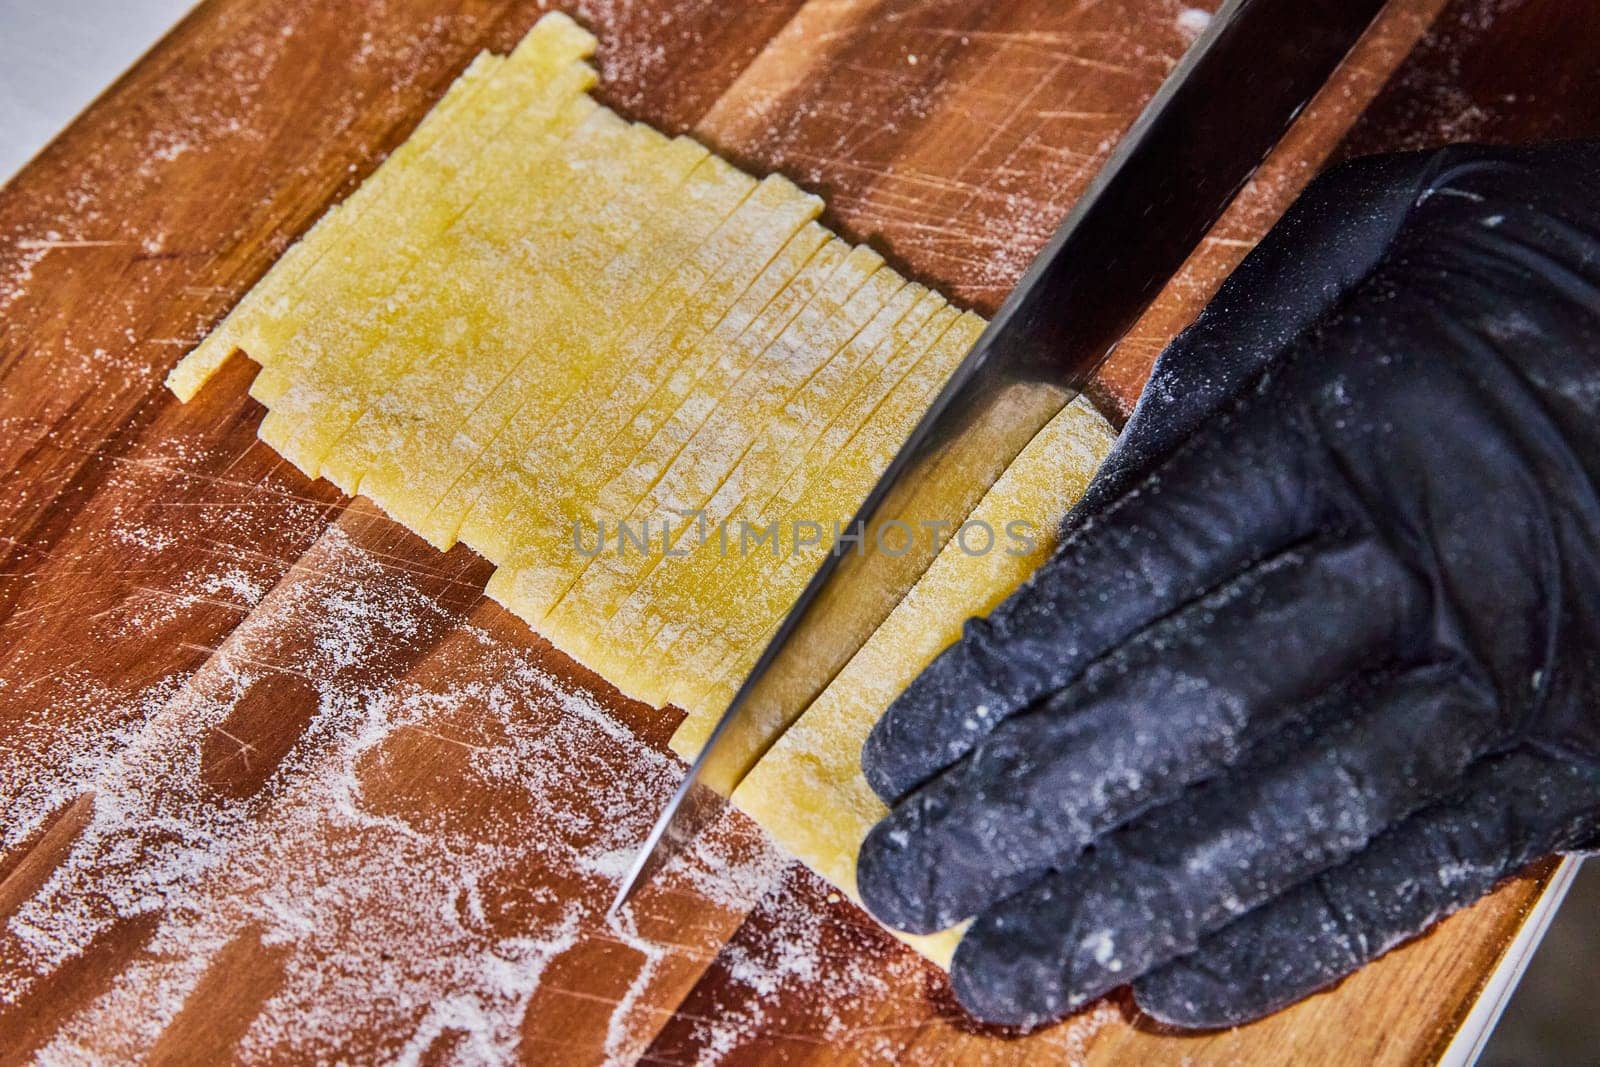 Artisanal Pasta Preparation in Fort Wayne - Hand Cutting Fresh Tagliolini Dough on a Rustic Wooden Board